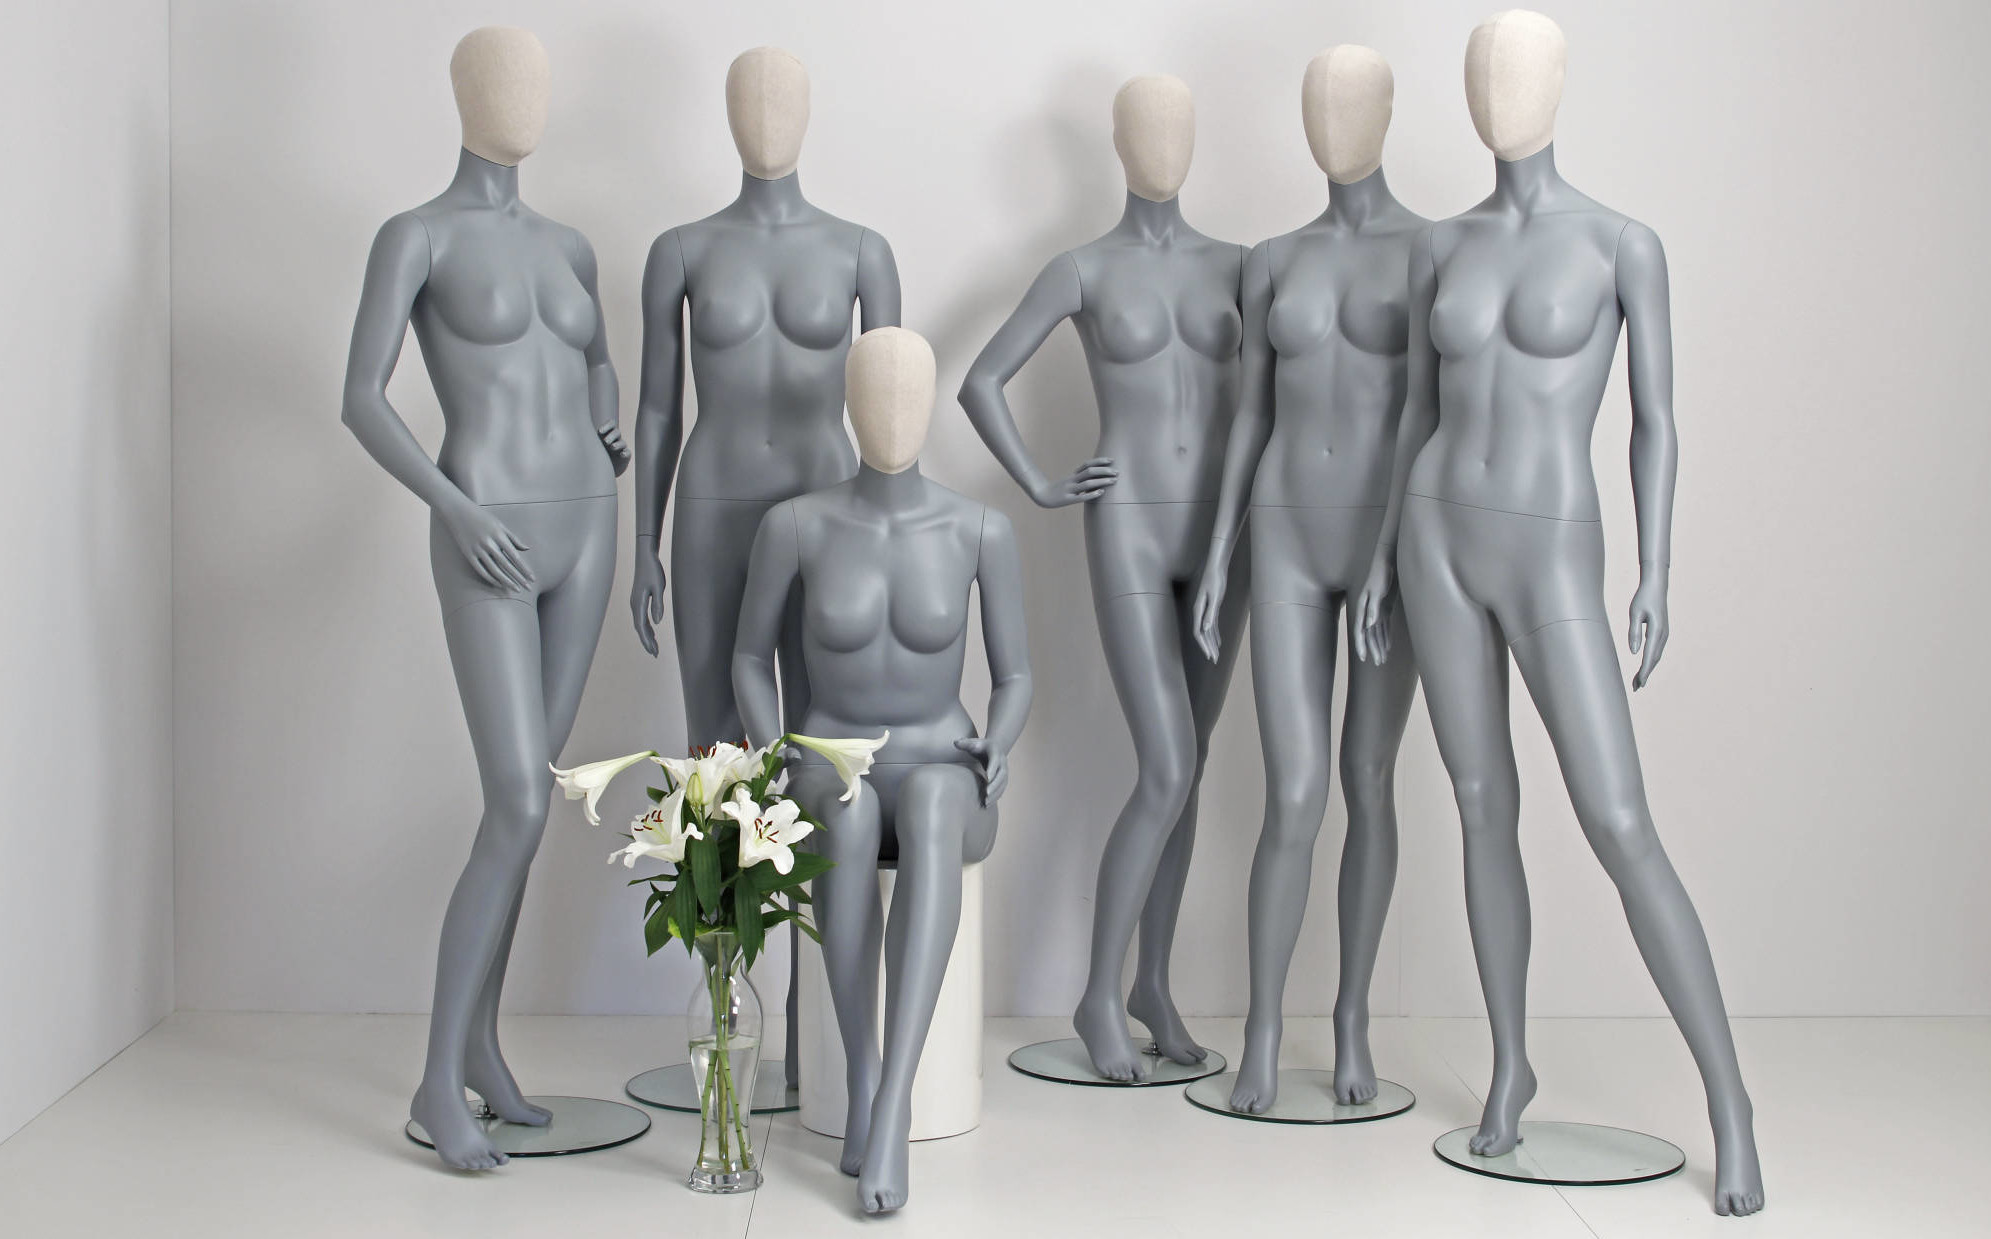 Mannequinen fås i flot grå farve, men kan leveres i andre ønskelige farver